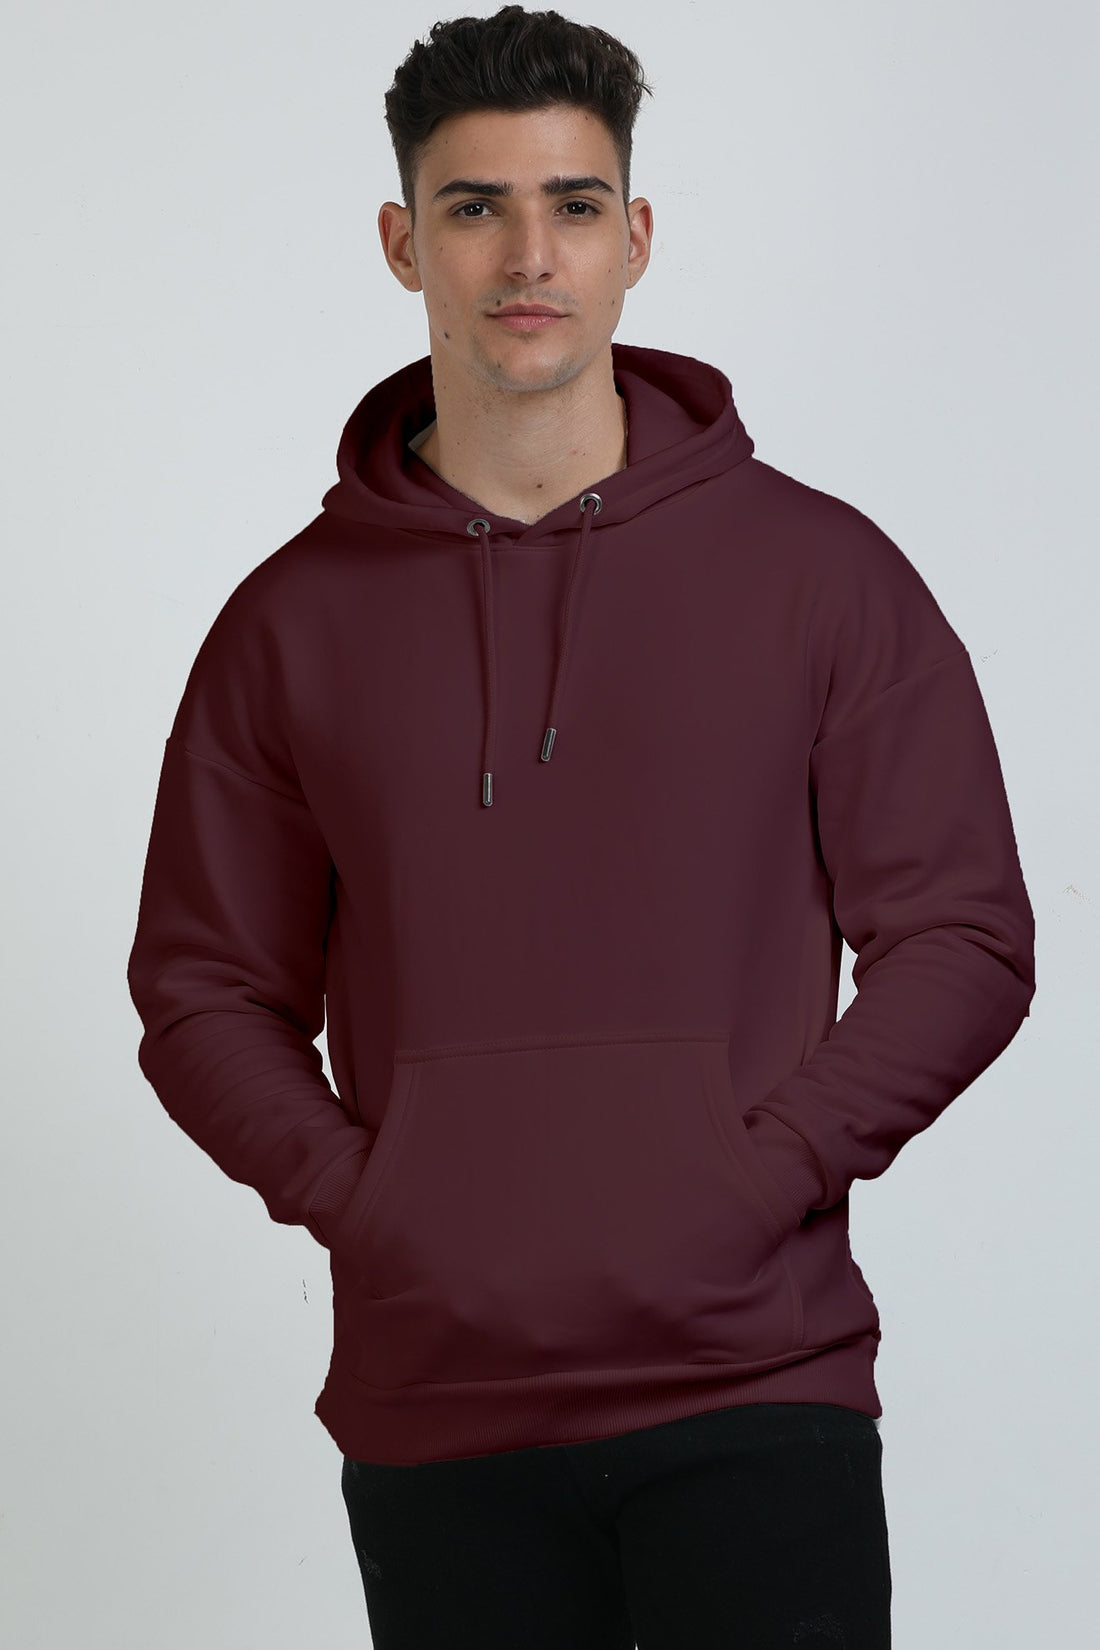 Unisex Oversized Hooded Sweatshirt - THE MINIES